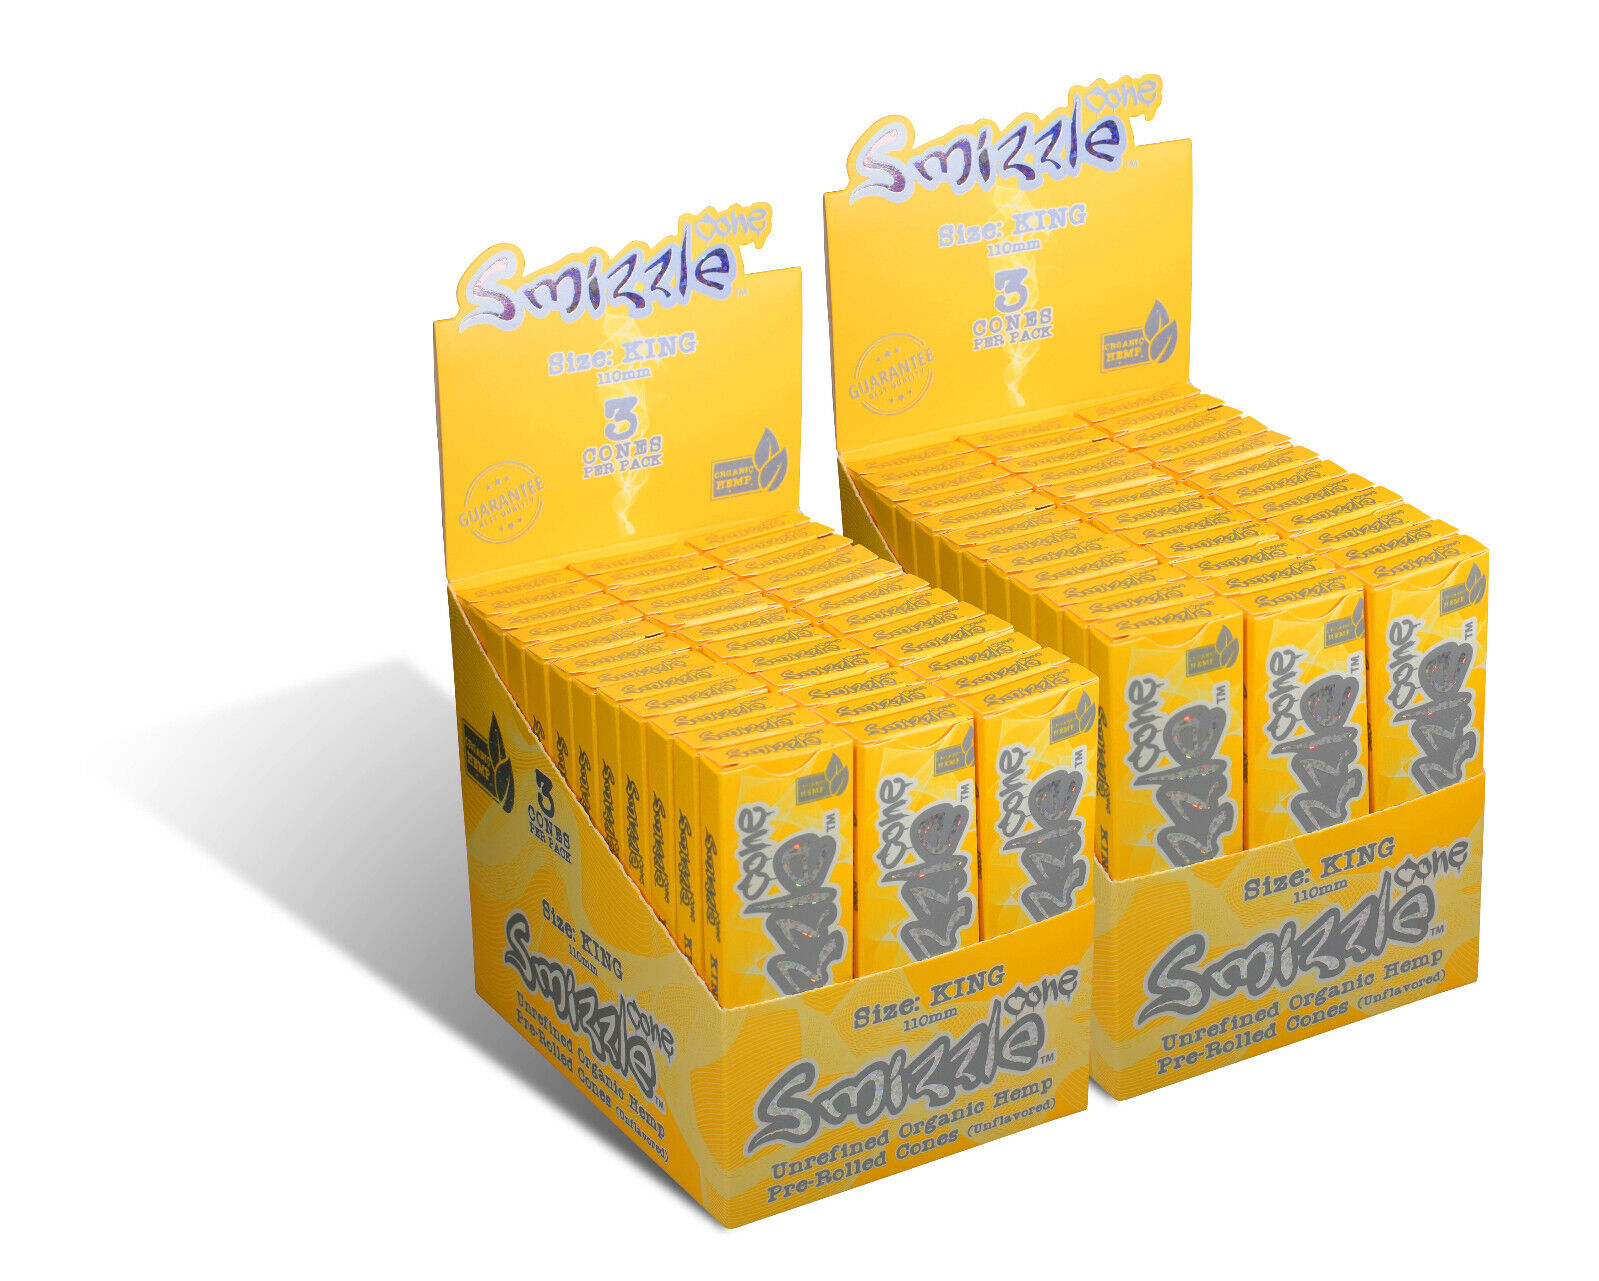 Smizzle King Cones in Retail Display Box - 2 Boxes, 216 pcs (108 x 2)